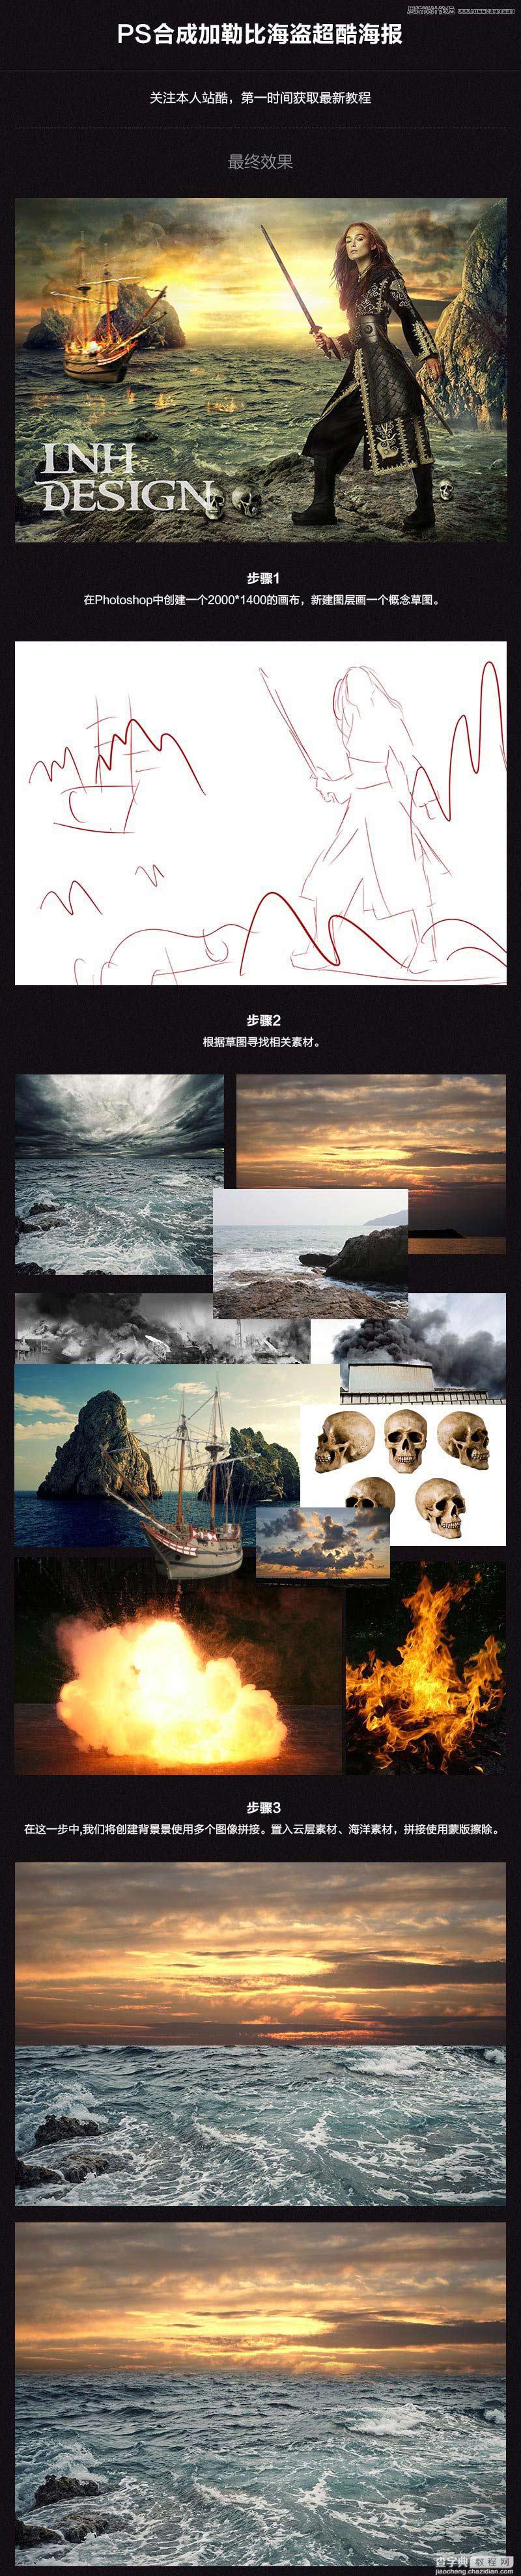 Photoshop合成超炫的加勒比海盗电影海报教程1